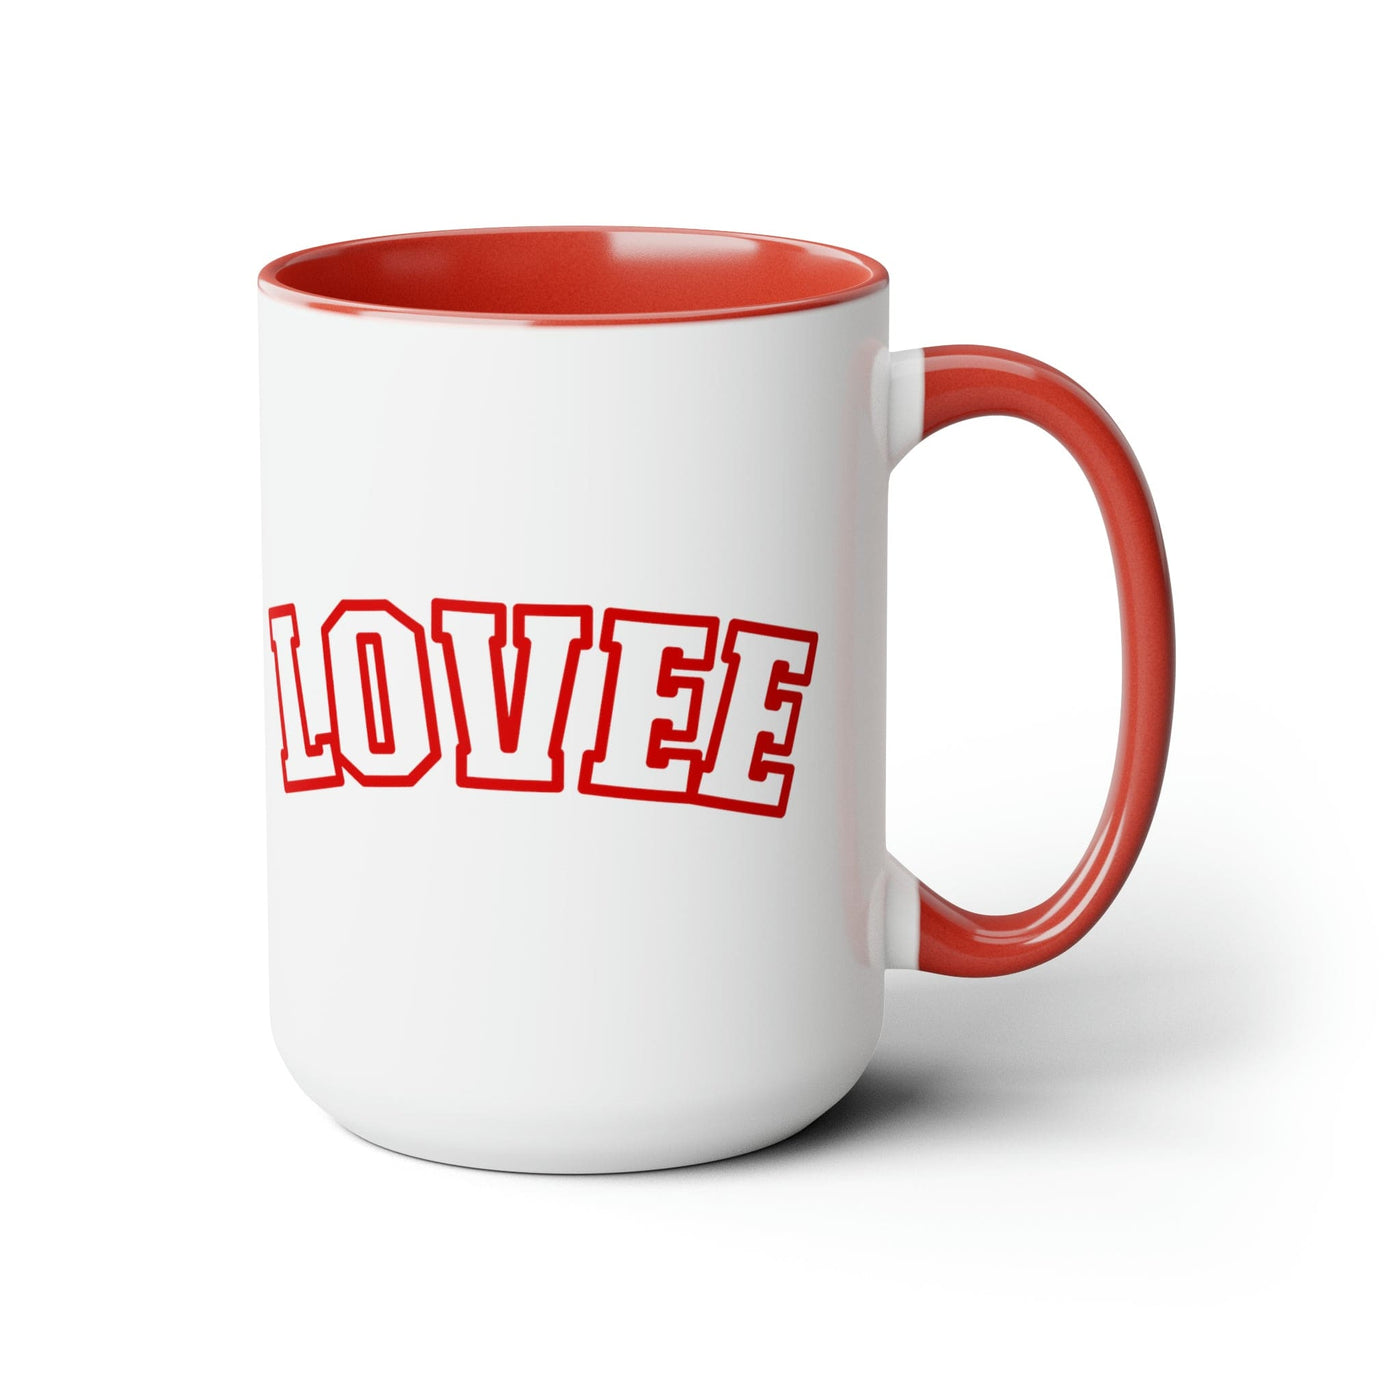 Accent Ceramic Coffee Mug 15oz - Say It Soul Lovee - Mug